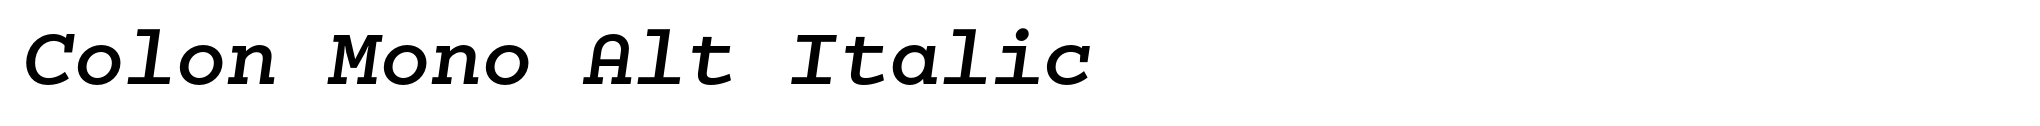 Colon Mono Alt Italic image